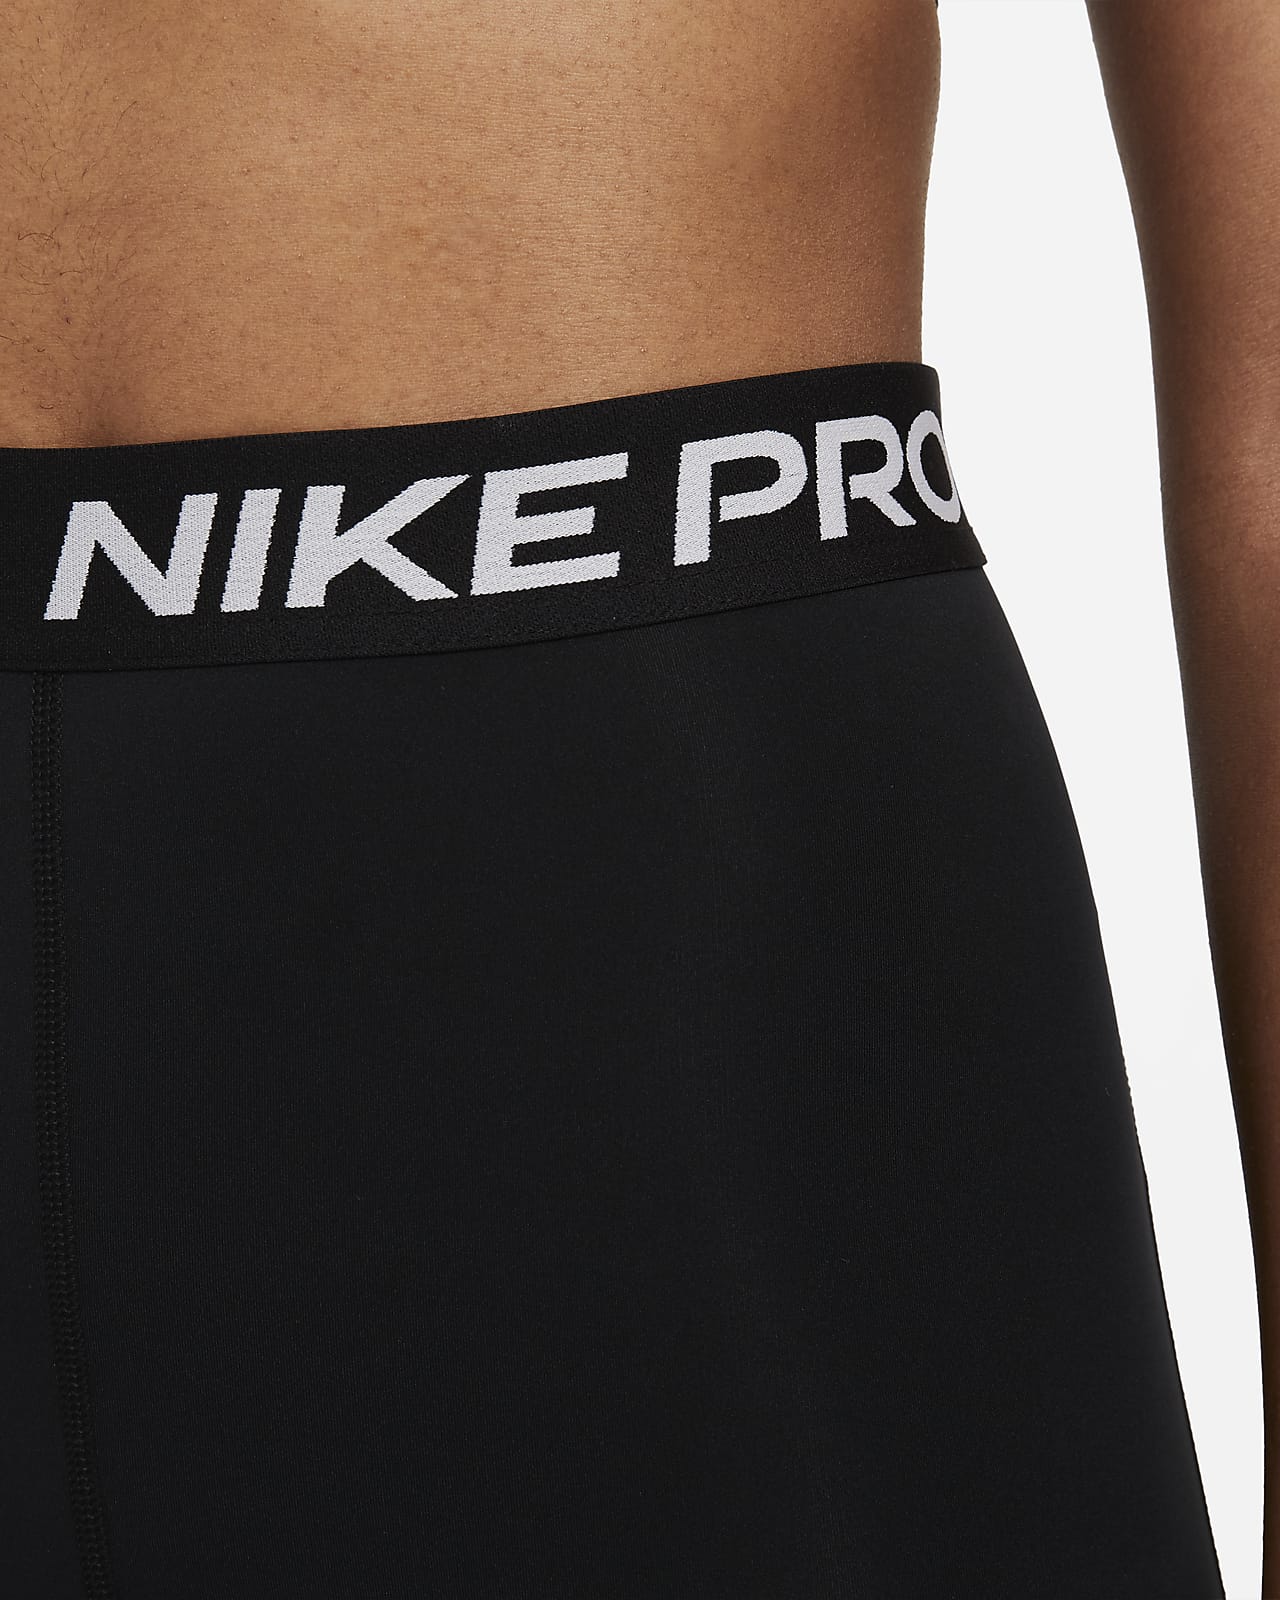 Nike Pro Black 365 High Rise 7/8 High Waisted Leggings